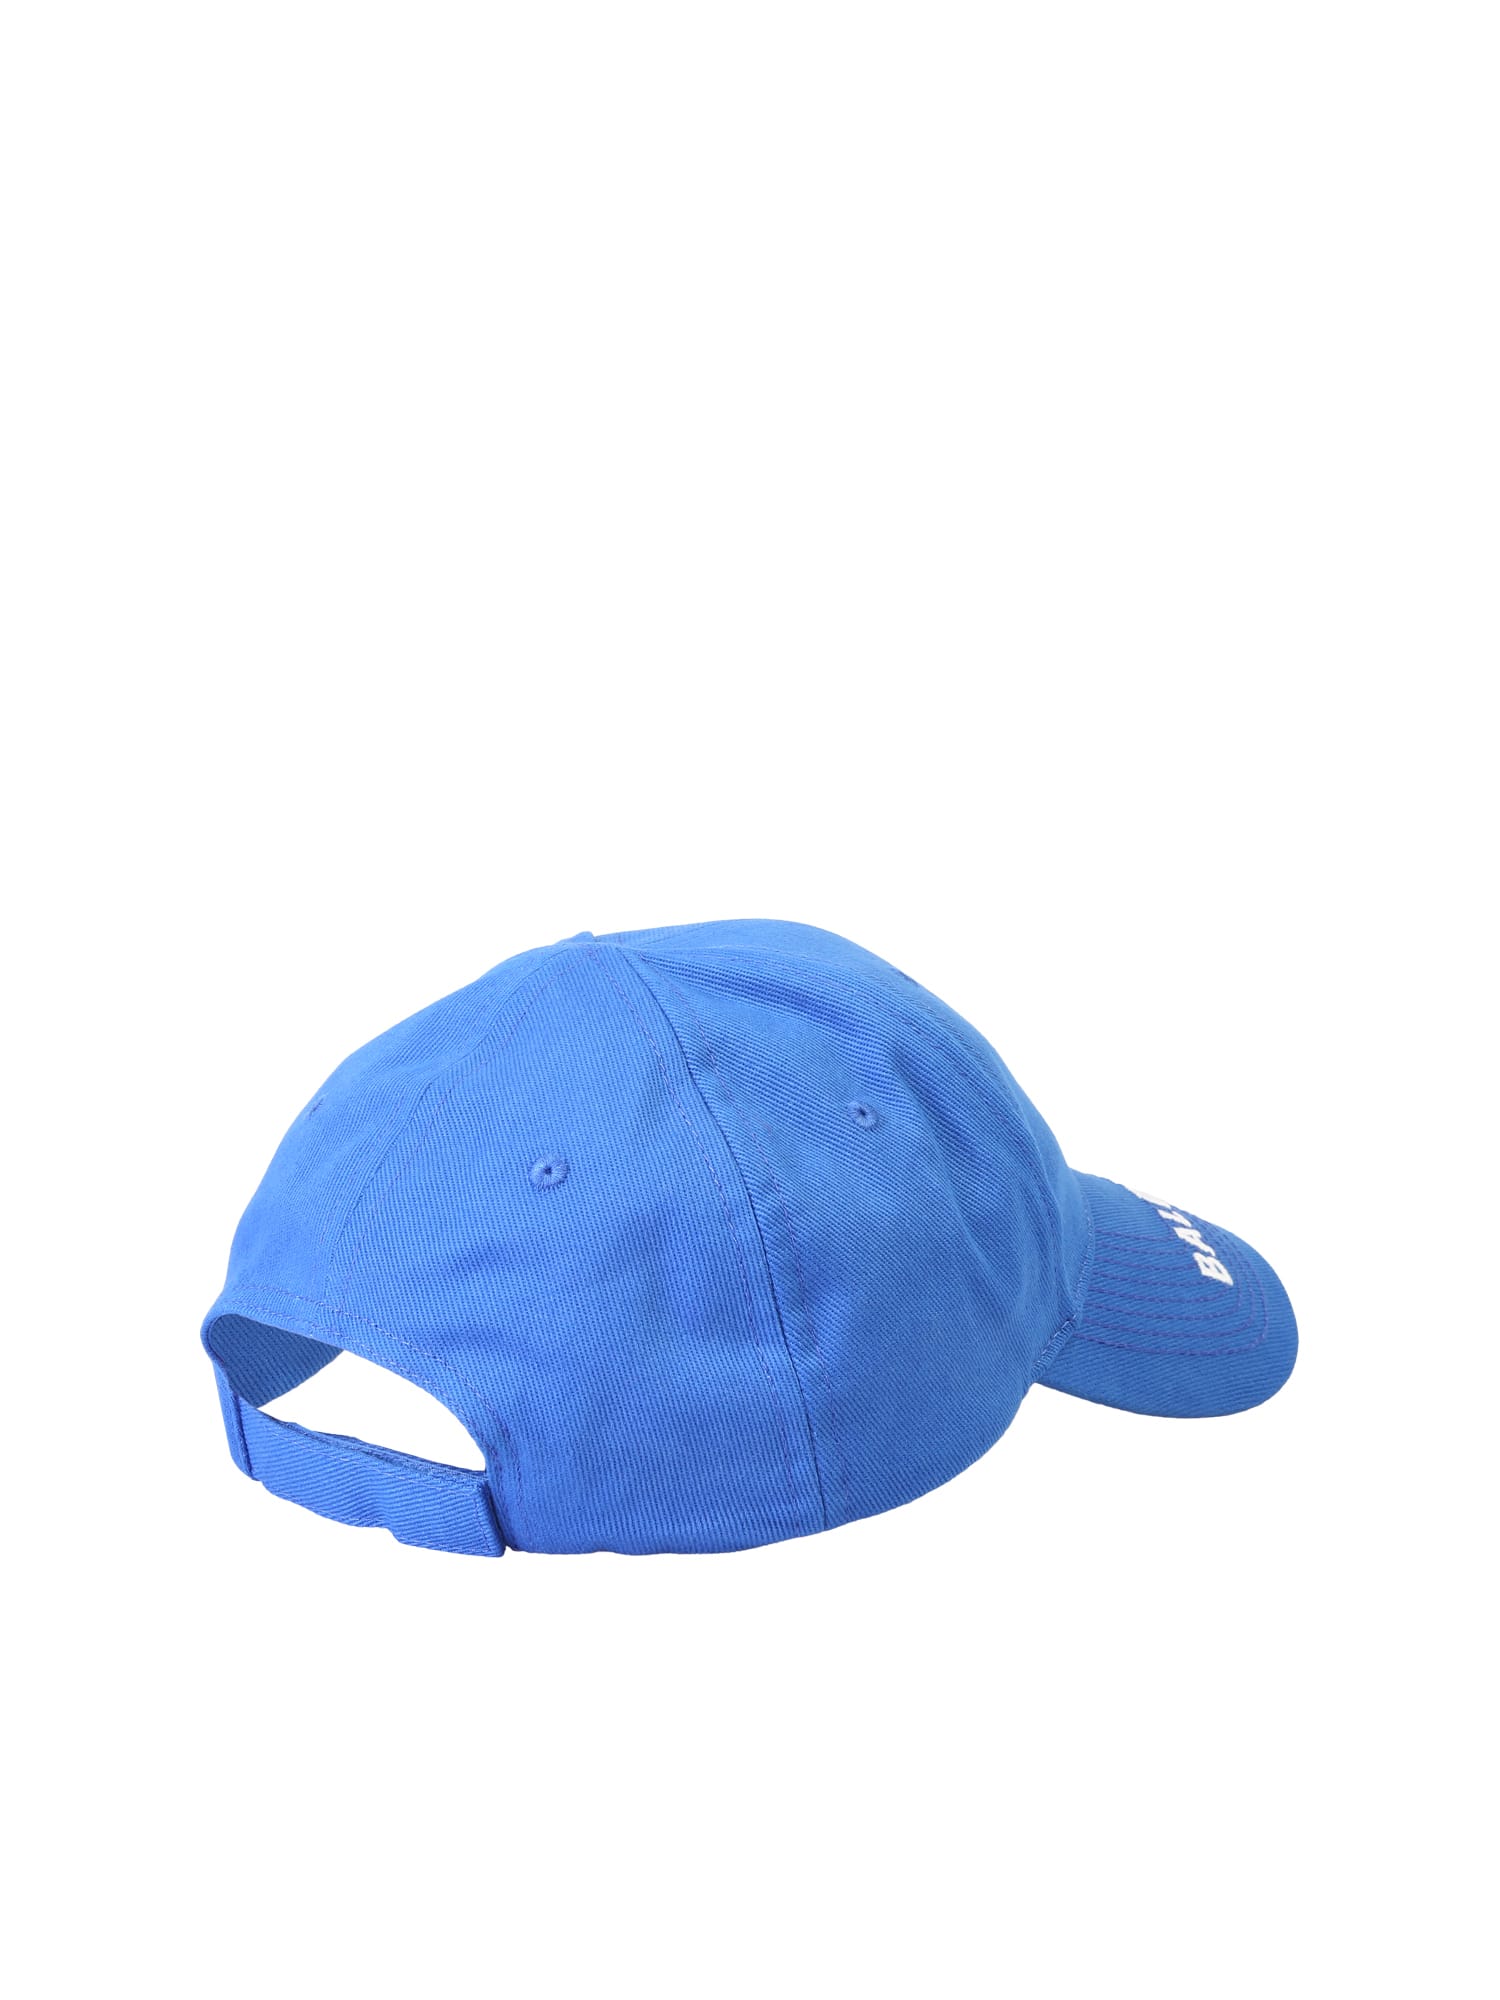 blue balenciaga hat